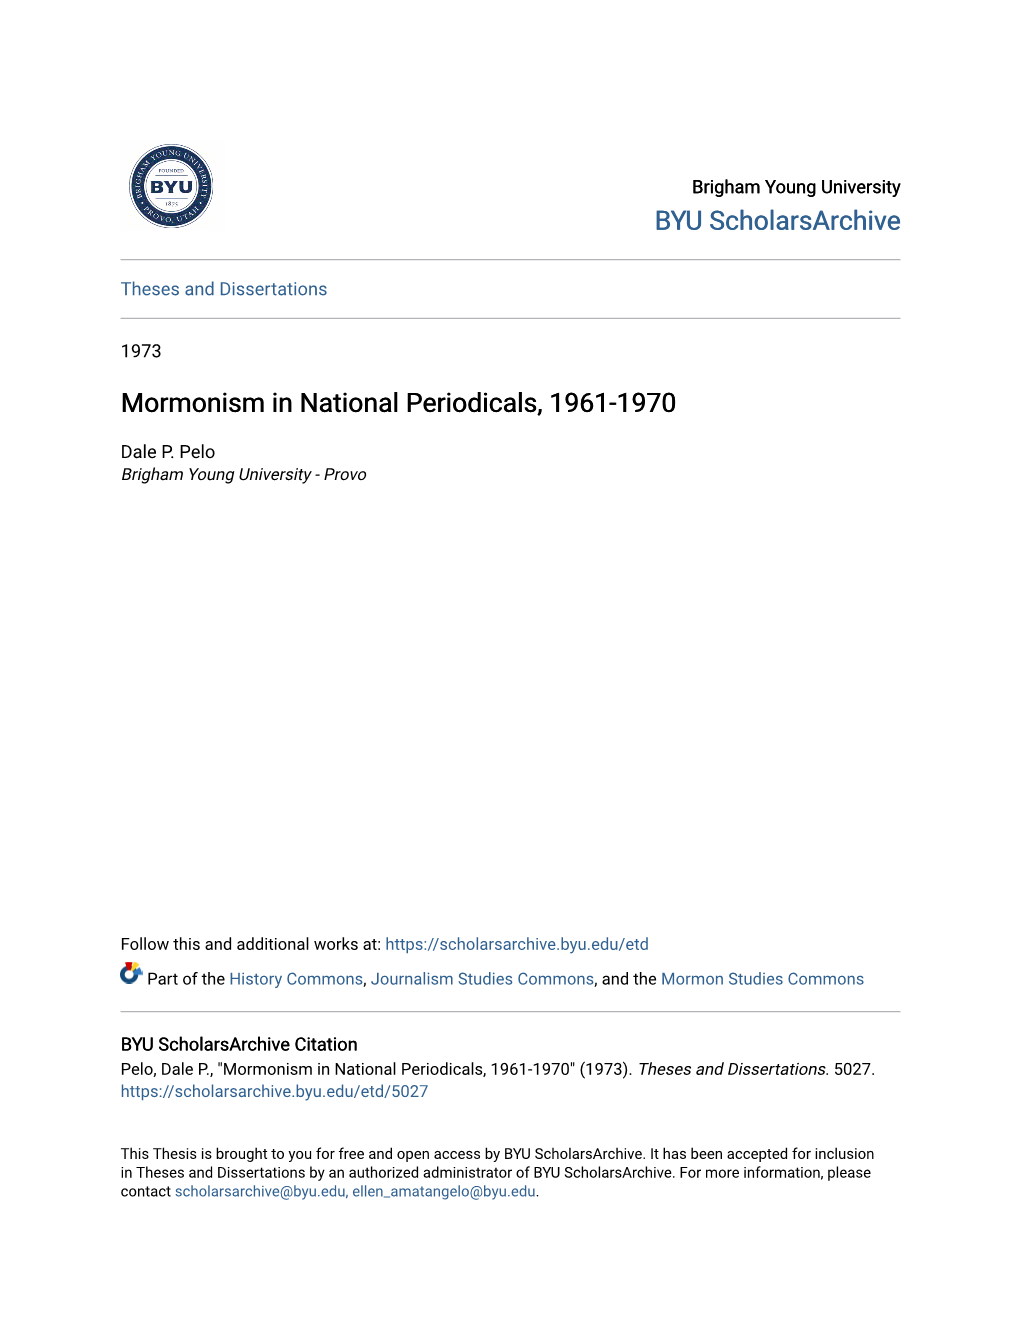 Mormonism in National Periodicals, 1961-1970